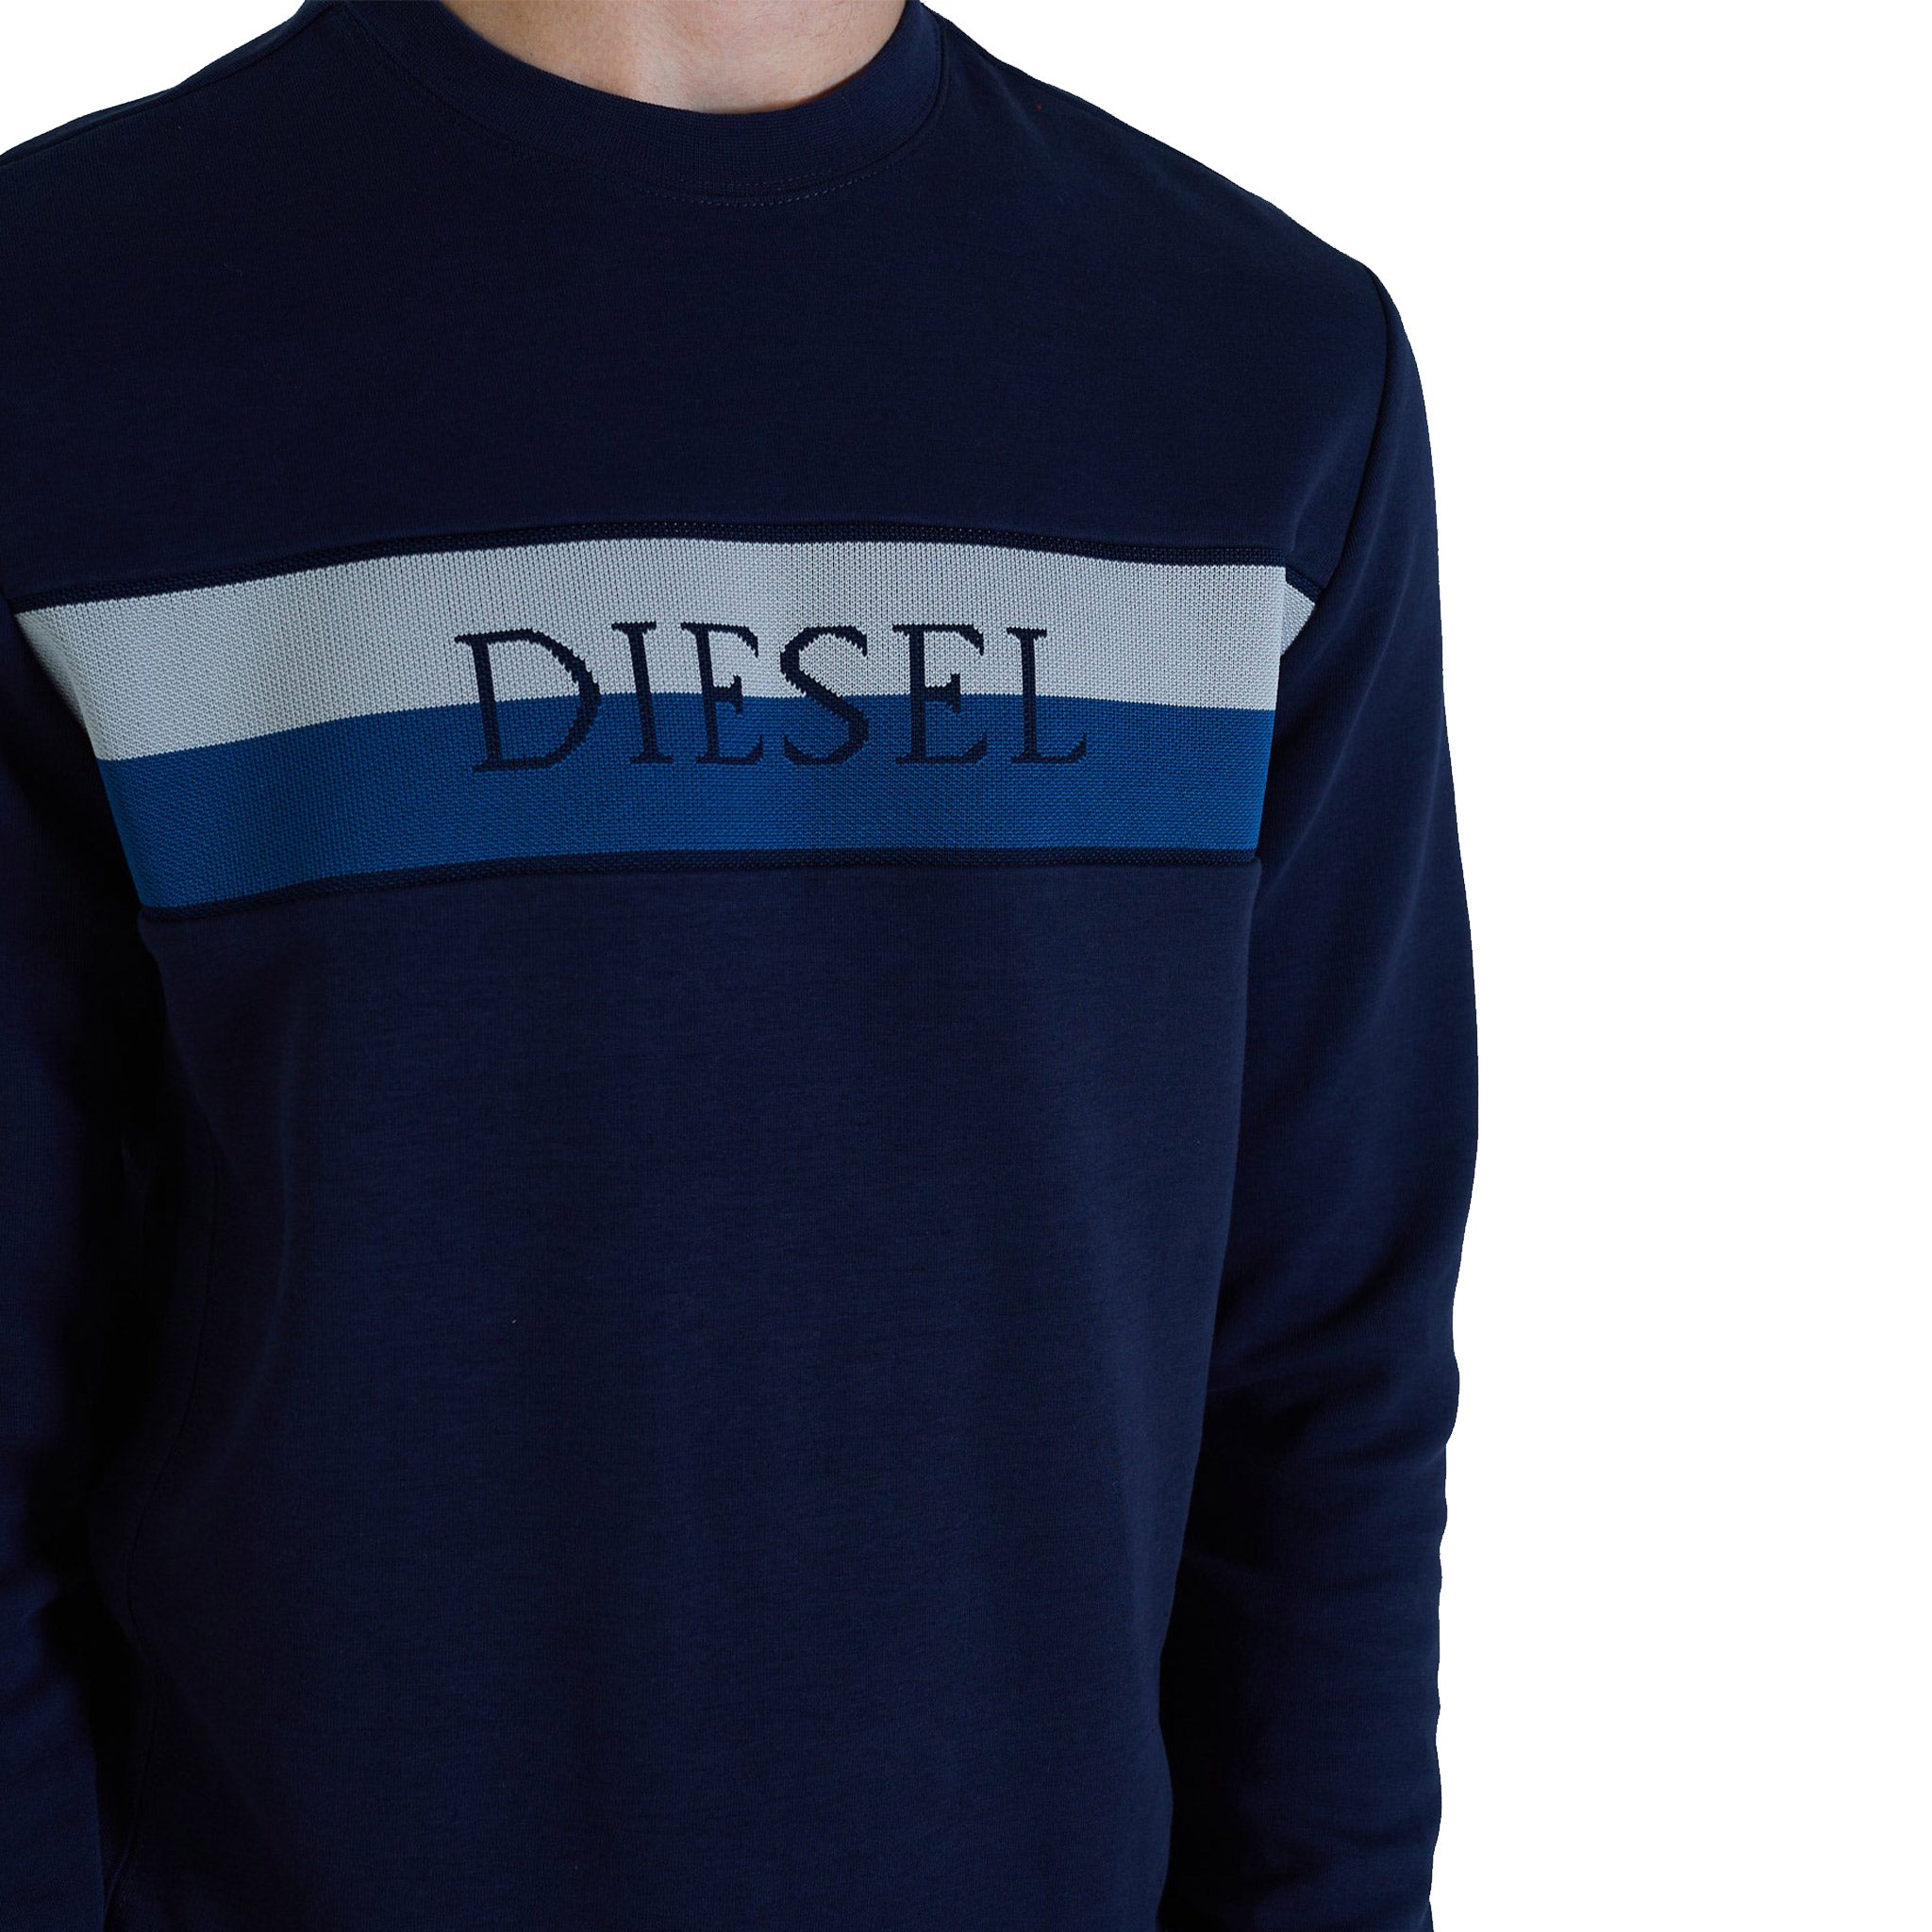 Diesel Sweater - Andre Navy